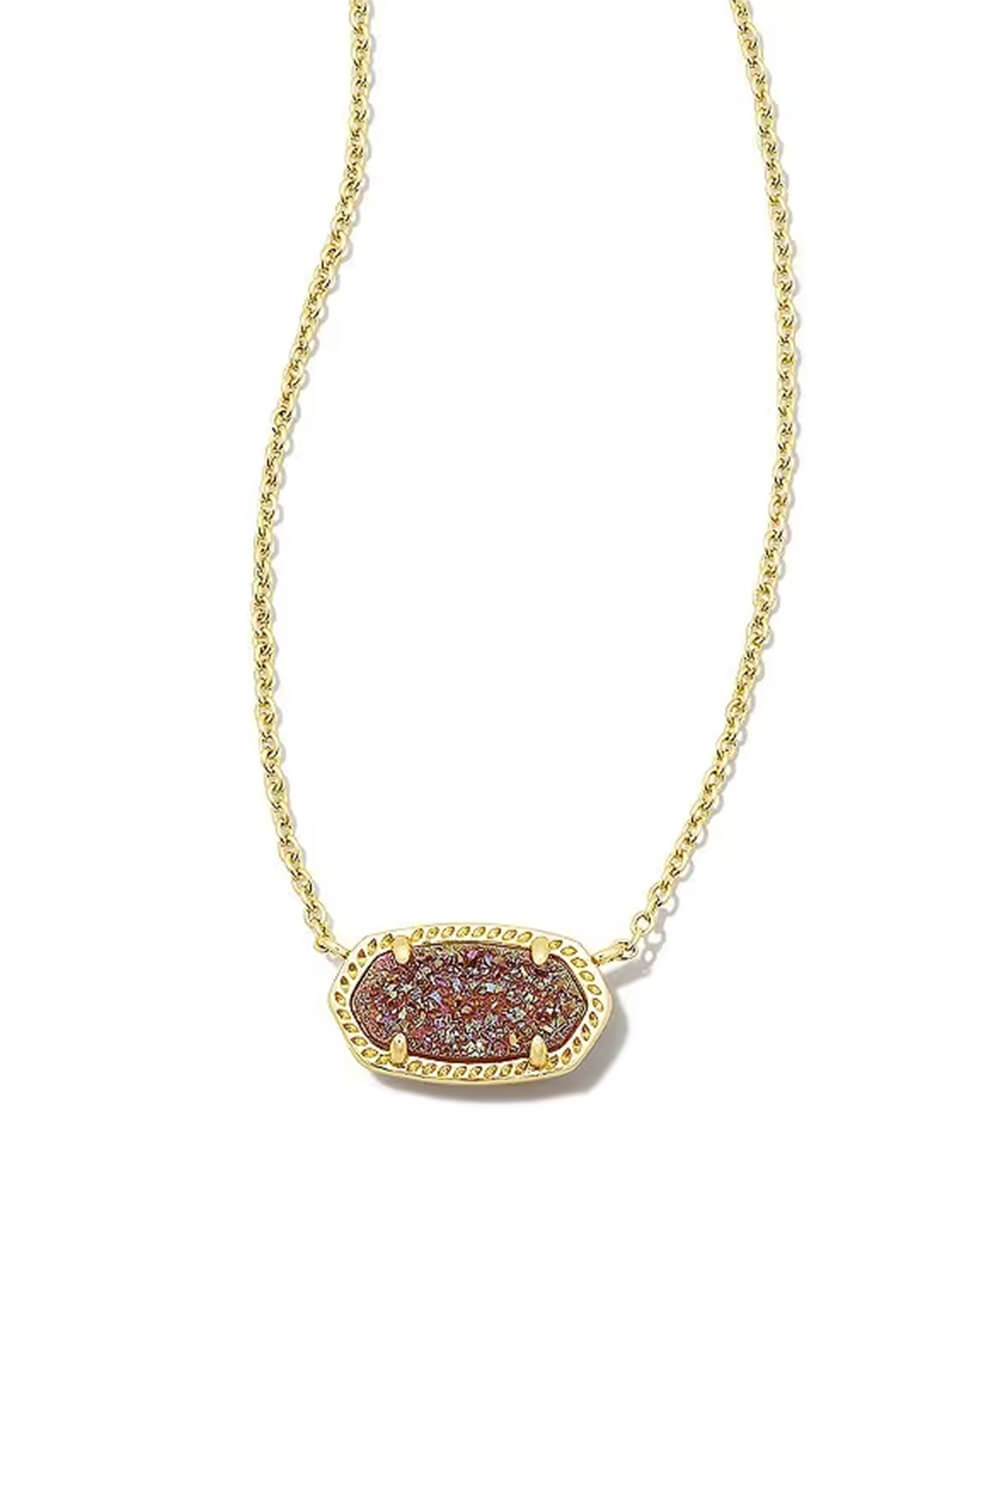 Kendra Scott Elisa Pendant Necklace in Gold Spice Drusy | 9608856988 ...